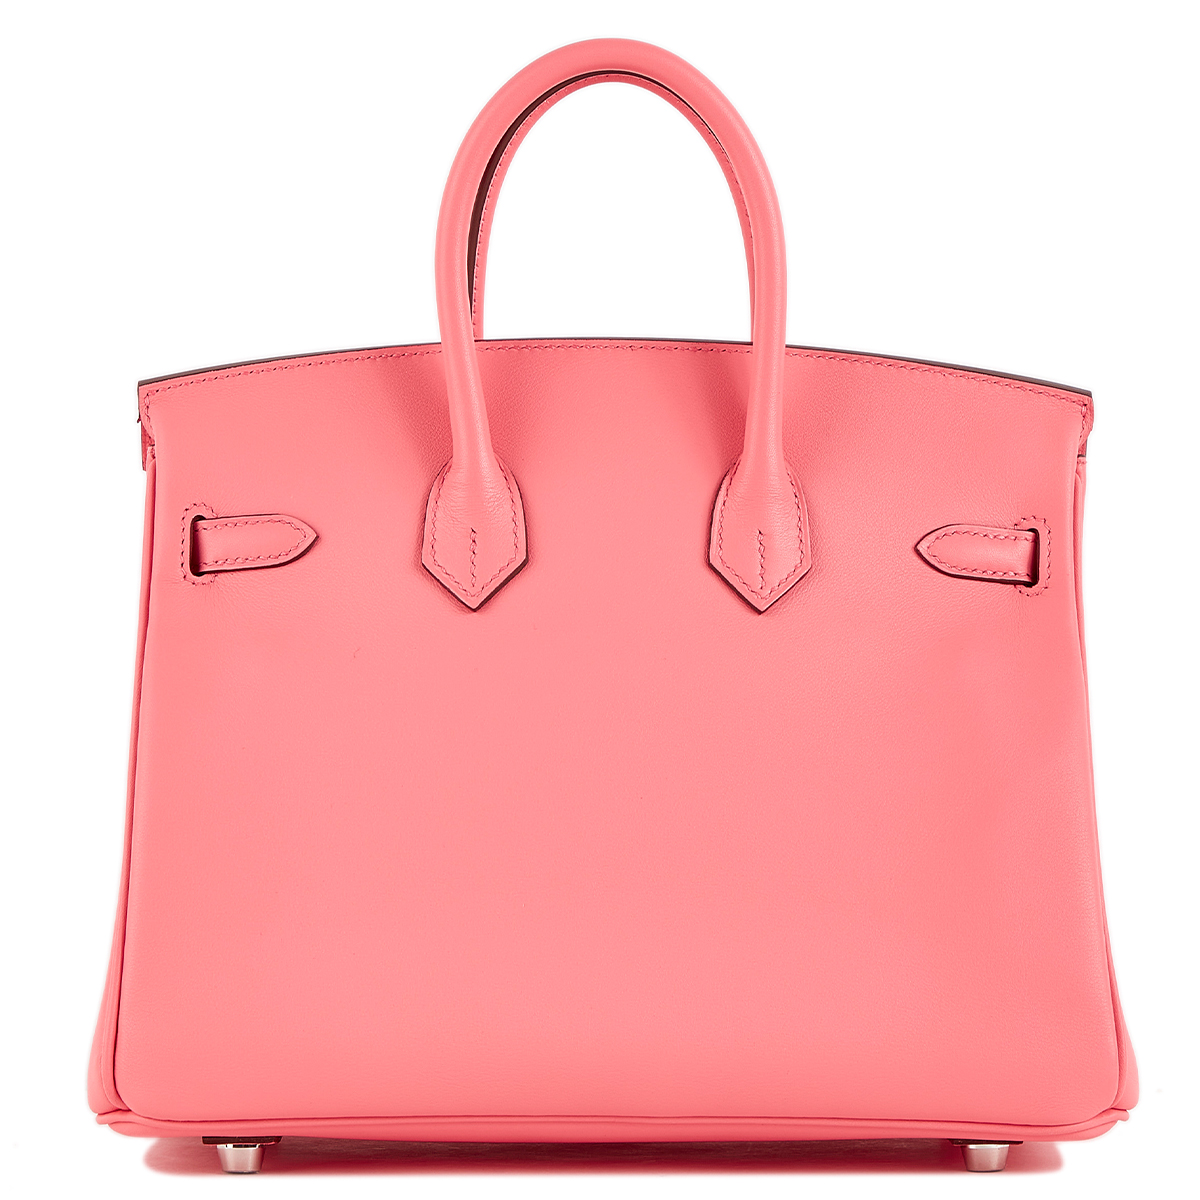 HERMÈS Birkin 25 handbag in Rose d'Ete Swift leather with 